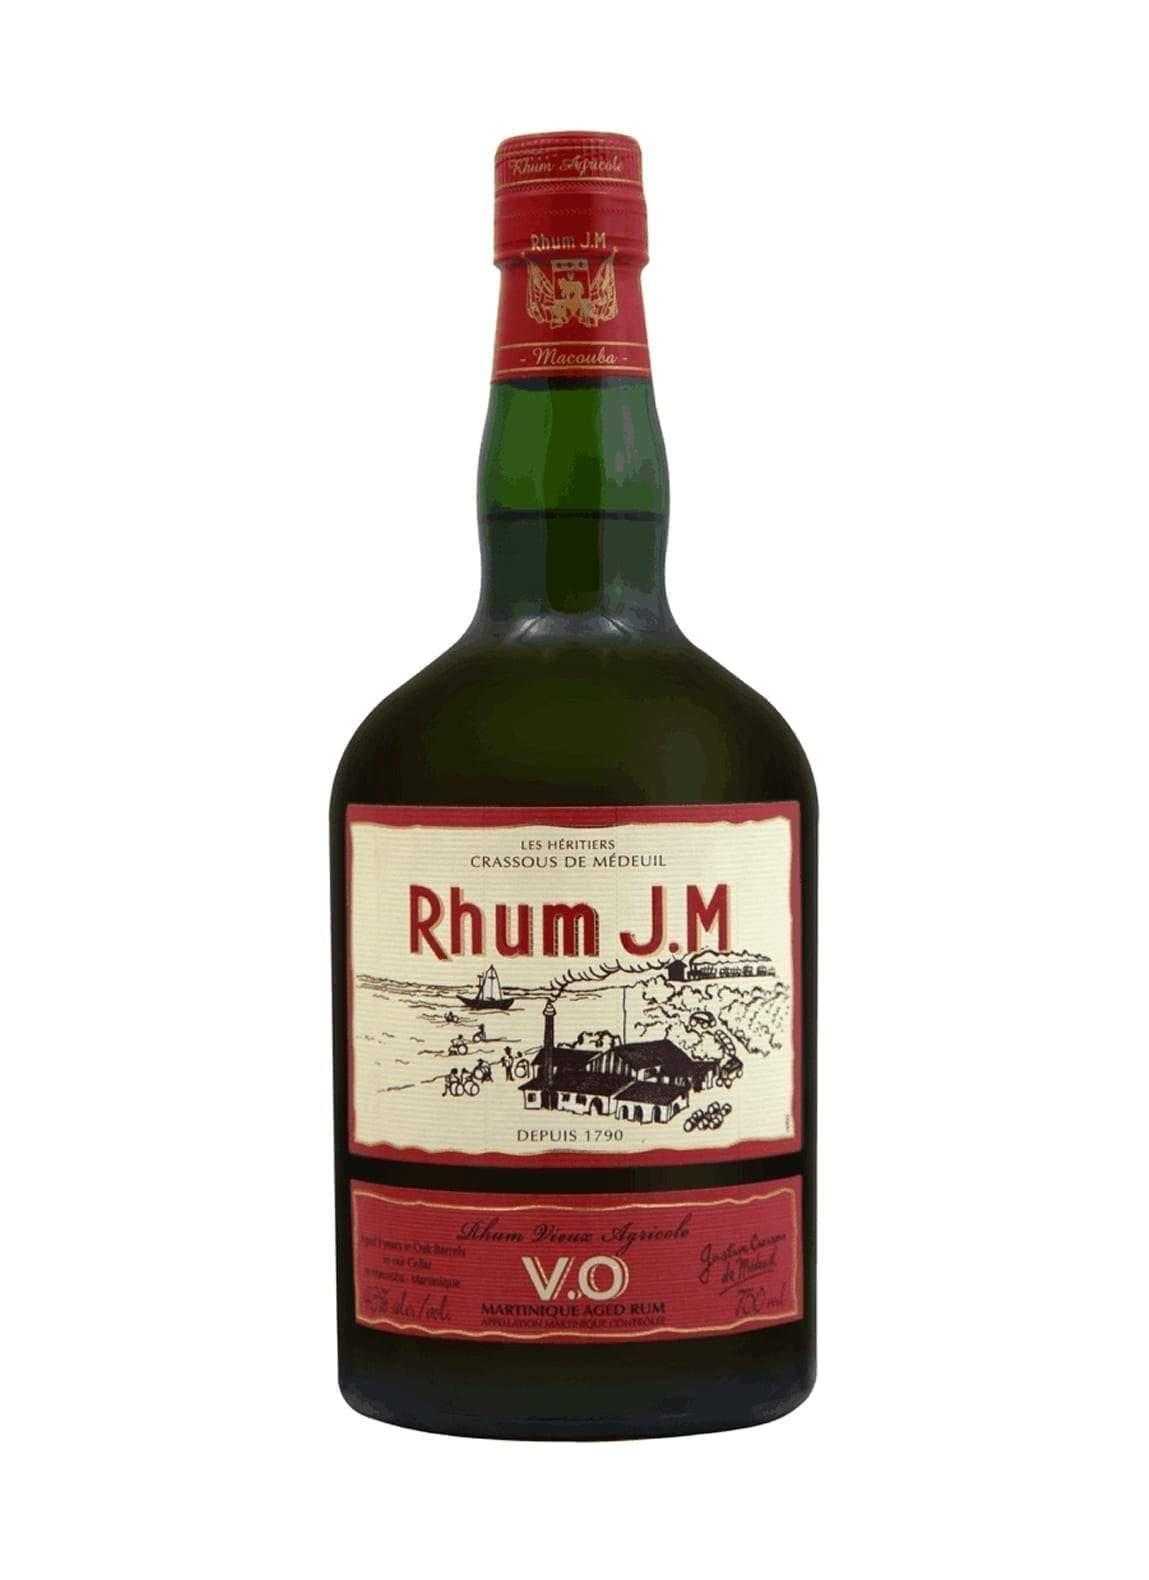 J.M Rhum Agricole VO Vieux Martinique 43% 700ml | Rum | Shop online at Spirits of France